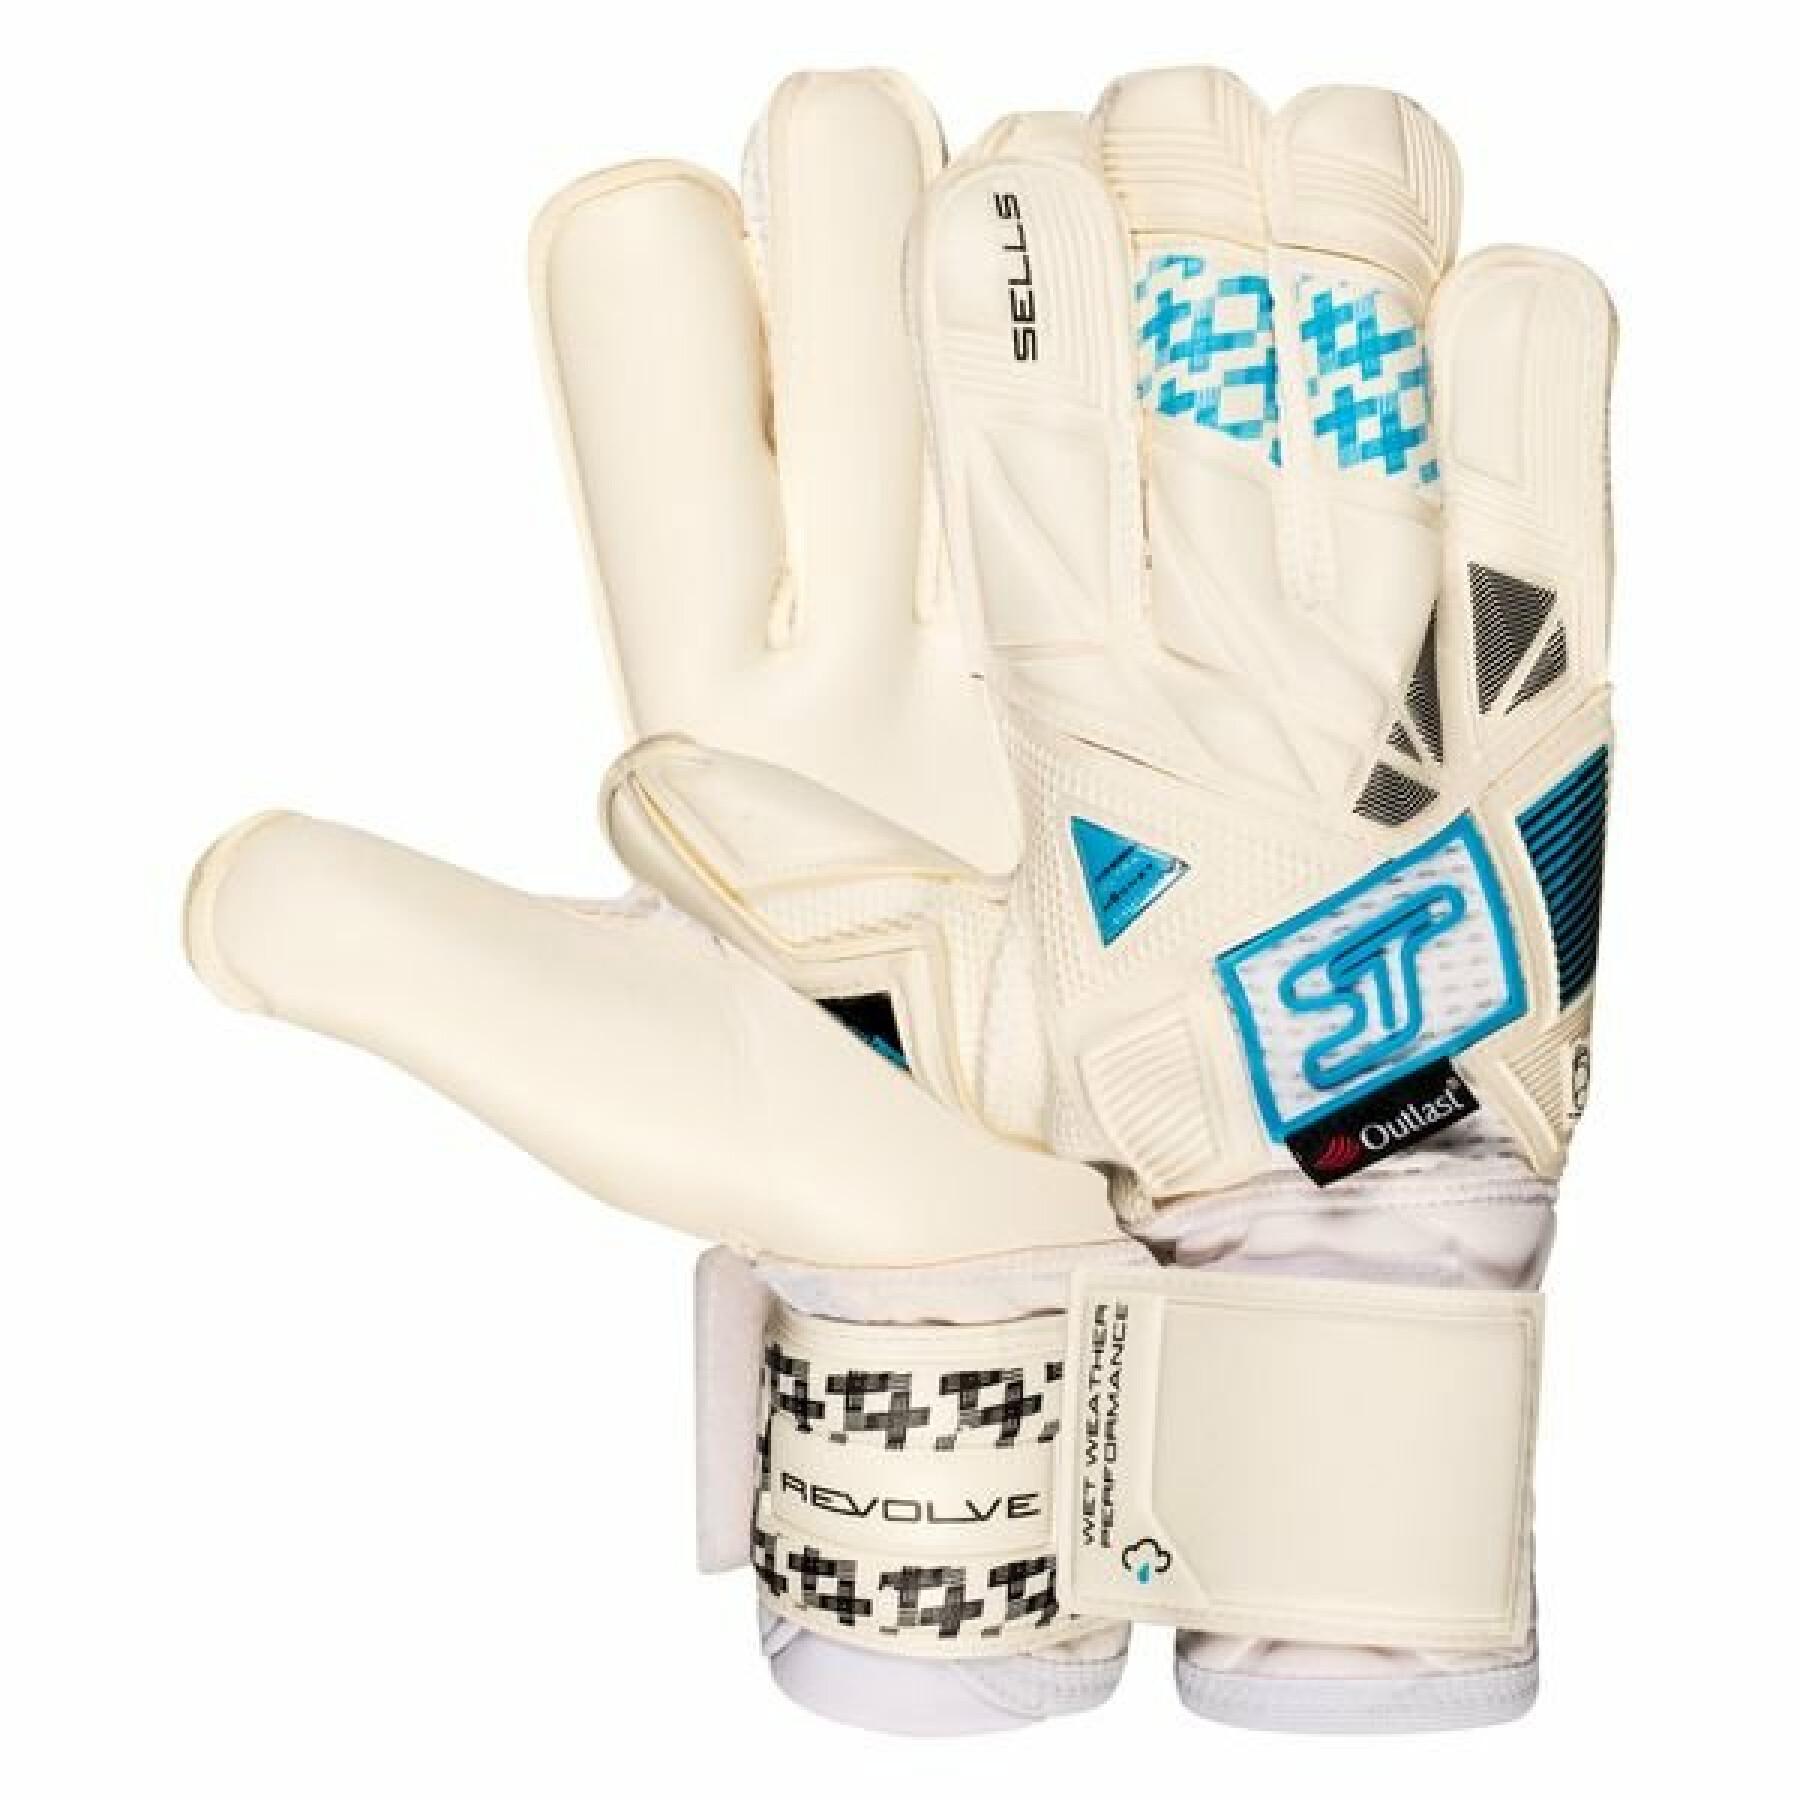 Goalkeeper gloves Sells Revolver Aqua Ultimate